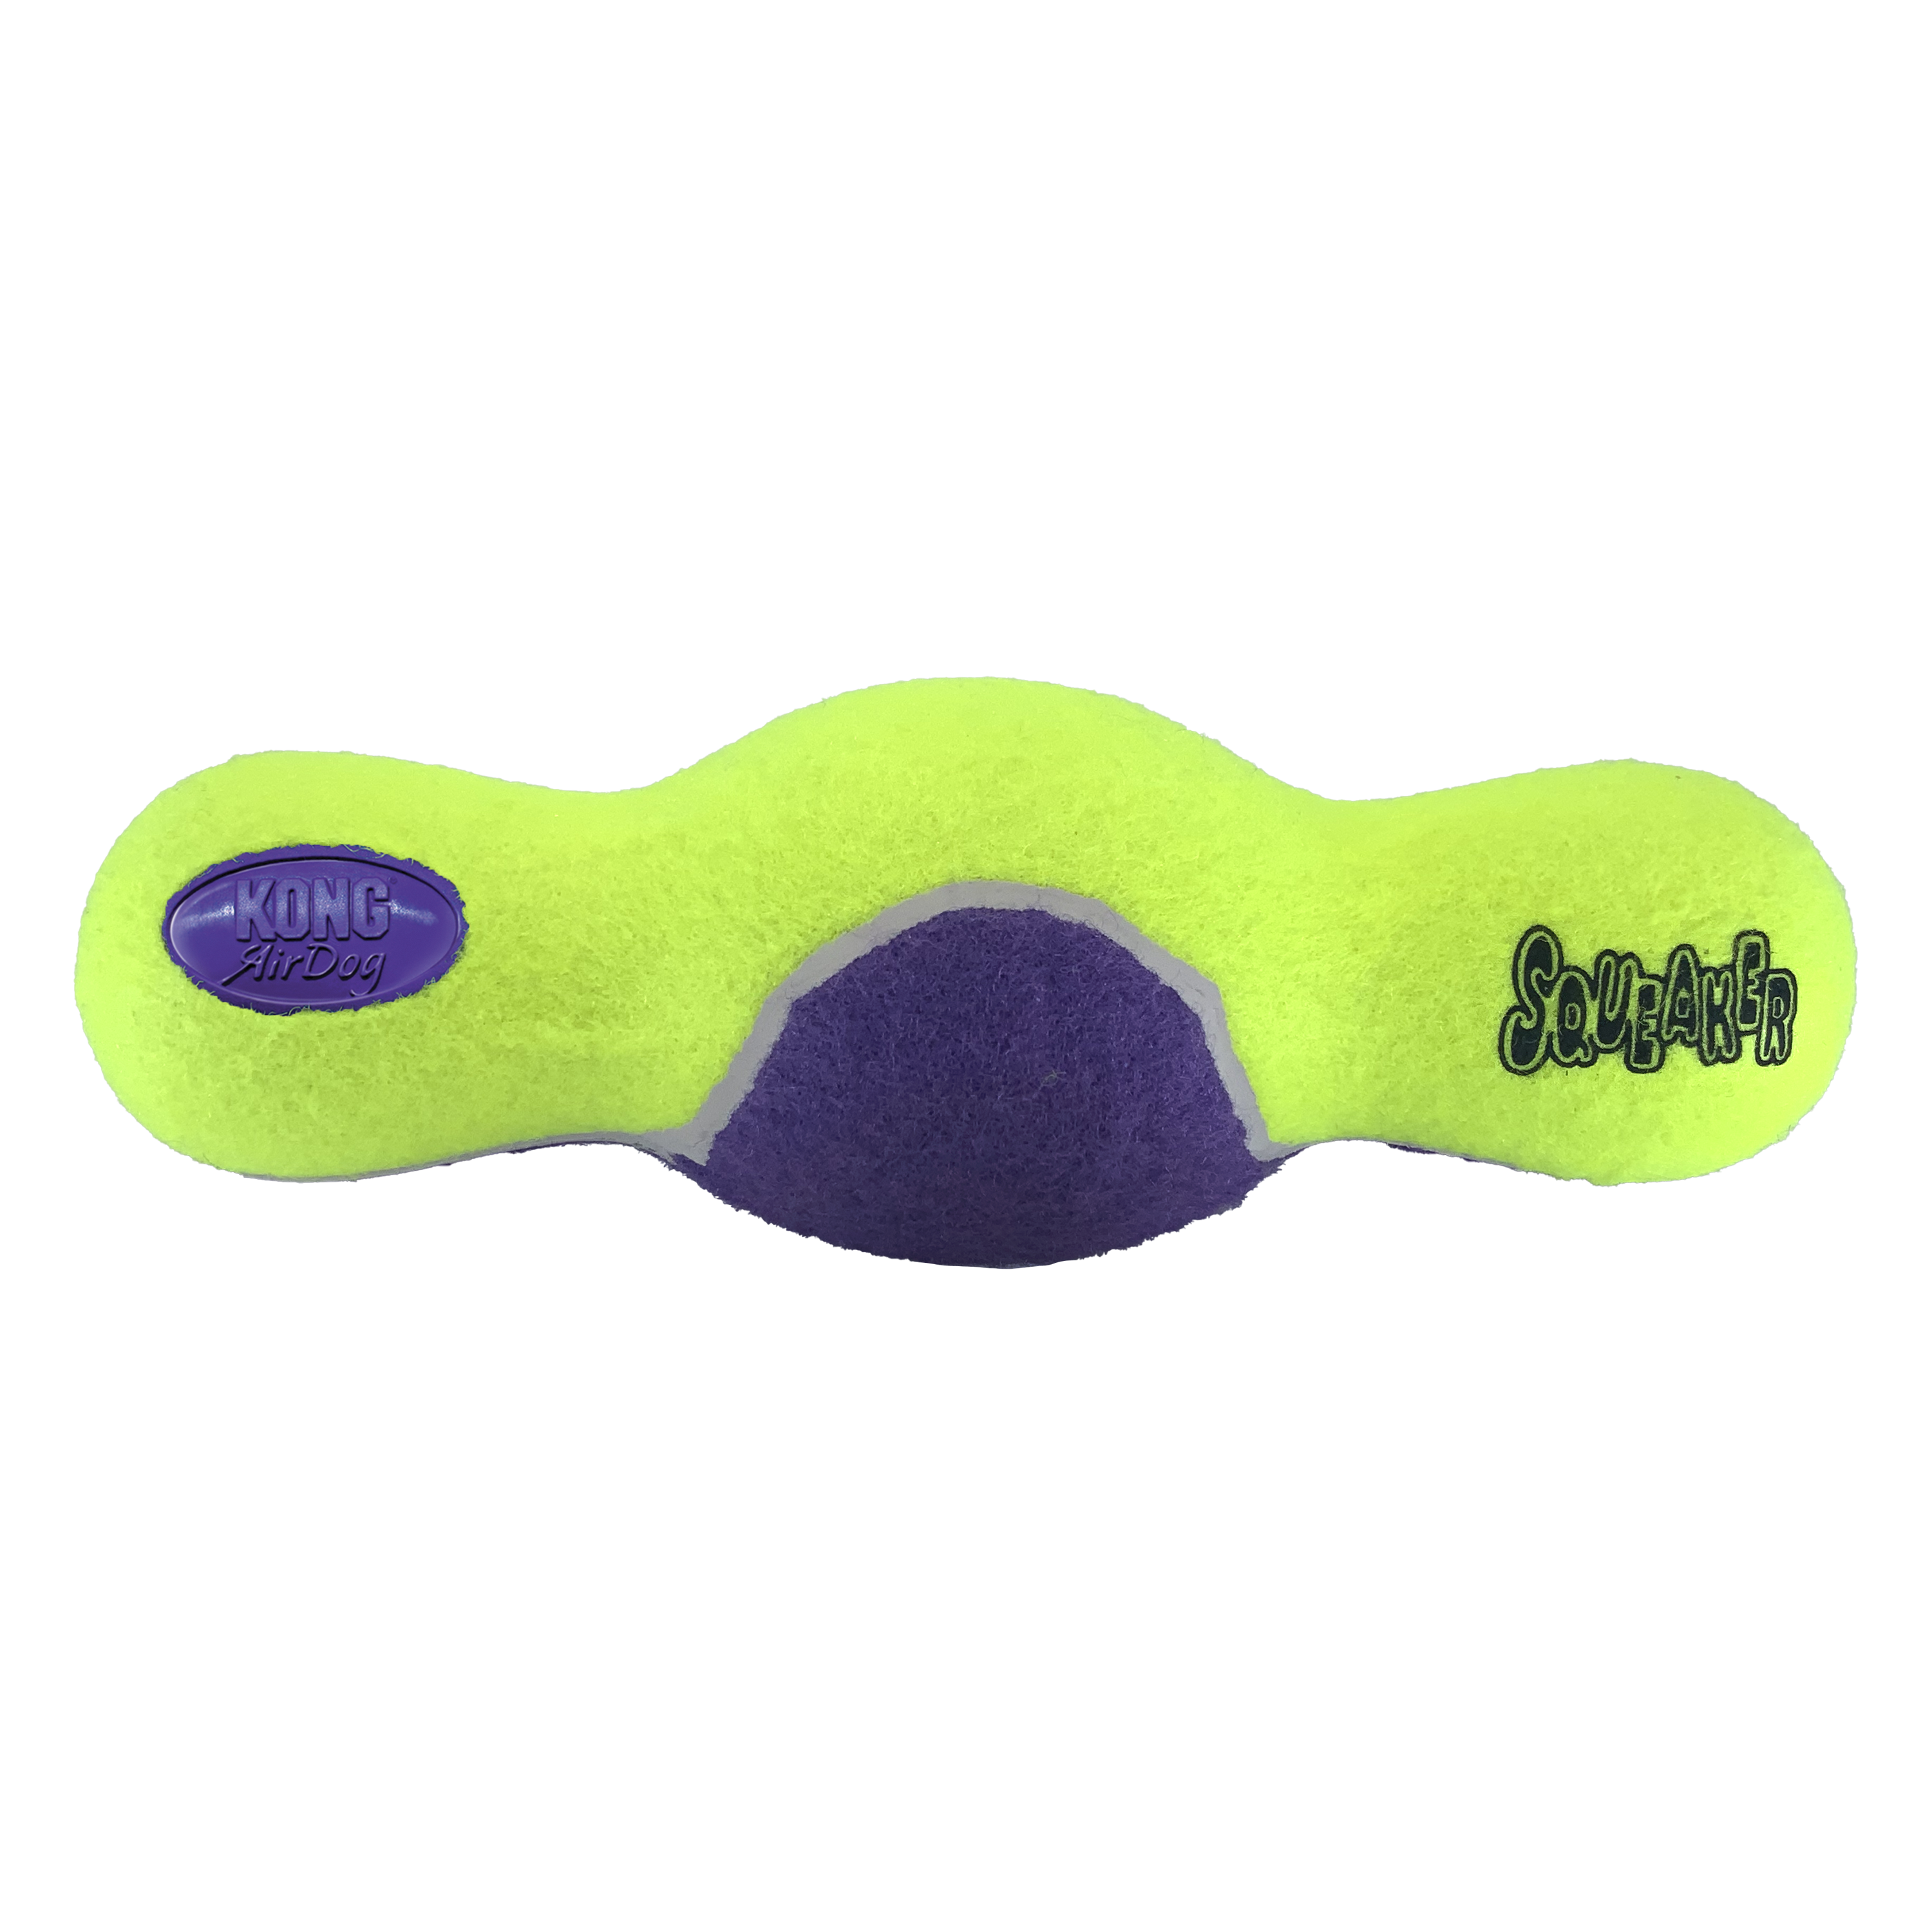 AirDog Squeaker Roller offpack termékkép